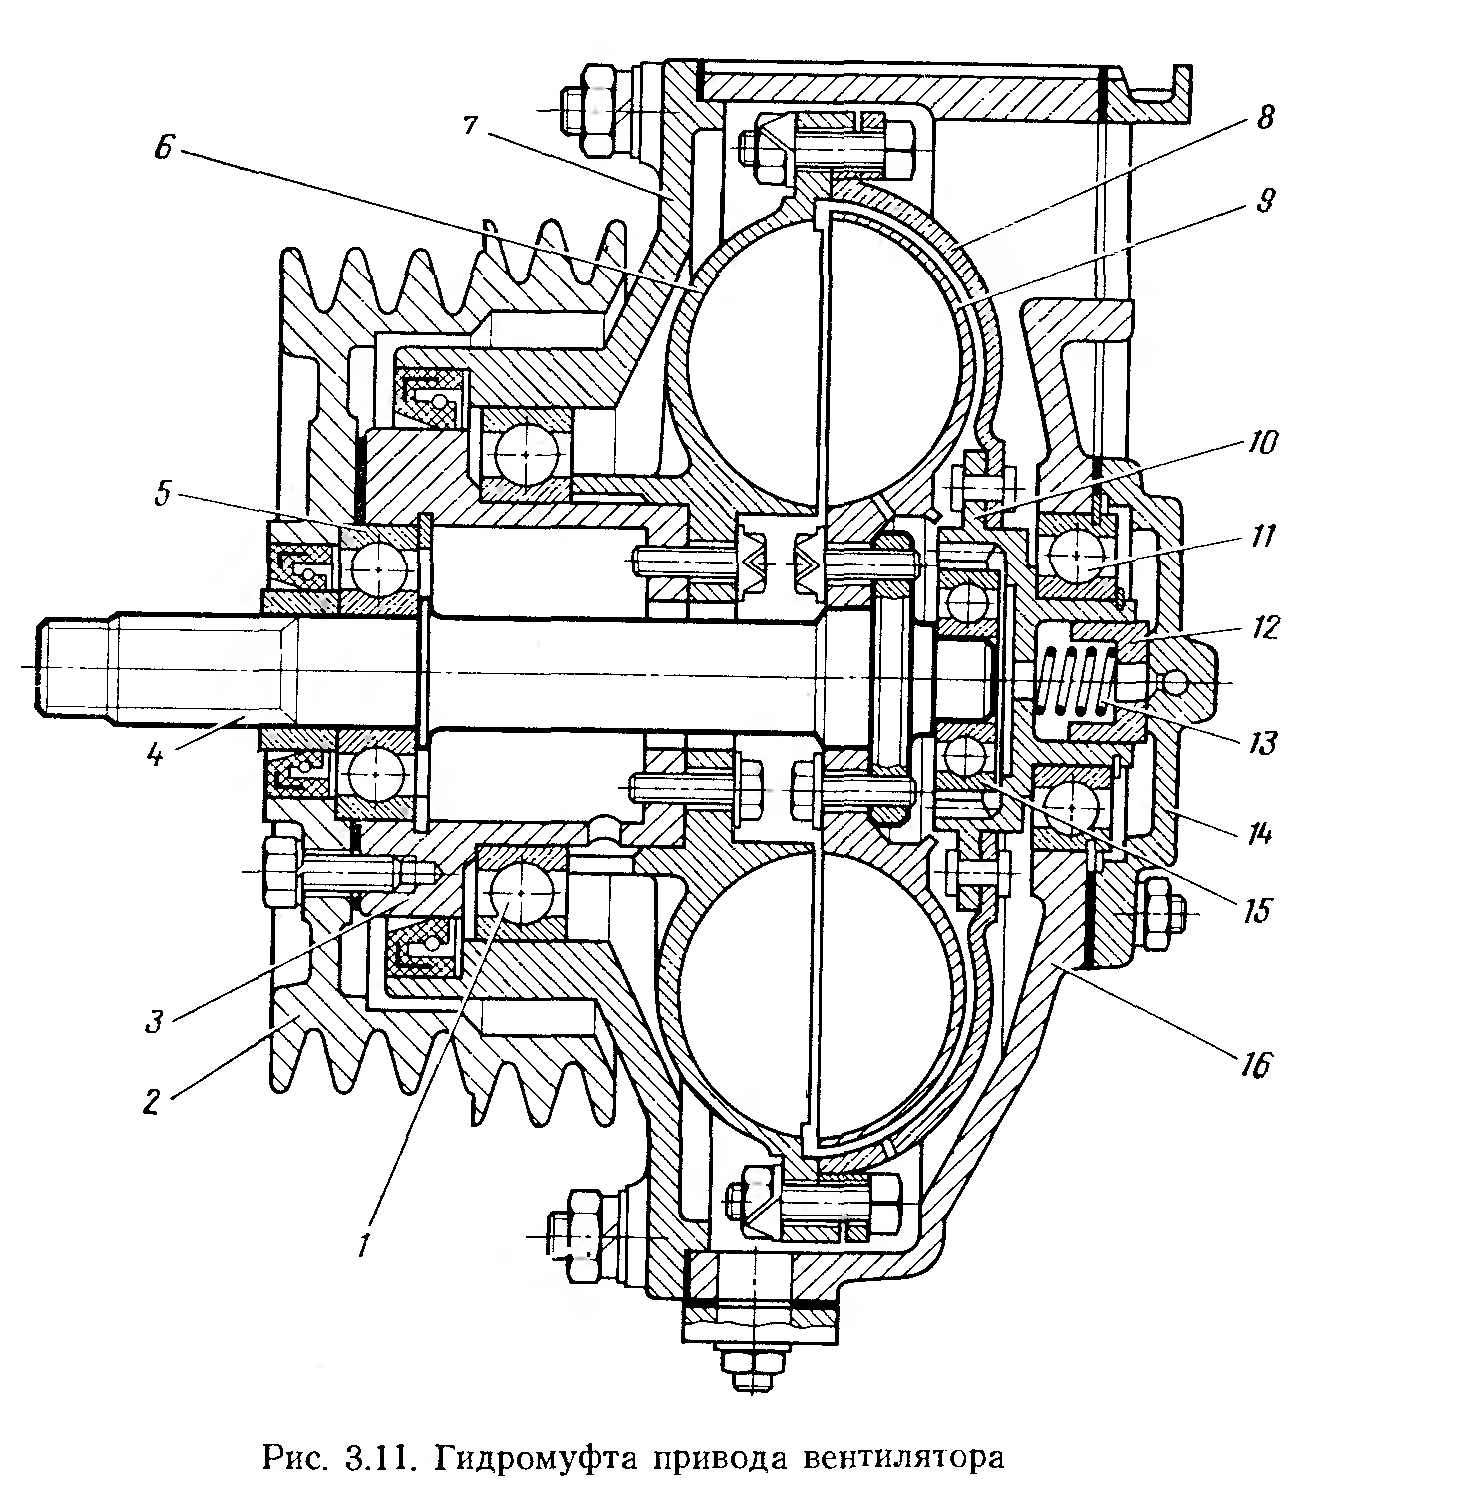 Гидромуфта вентилятора камаз. Привод гидромуфты КАМАЗ 740. Привод гидромуфты ЯМЗ 7511 чертеж. Схема гидромуфты двигателя КАМАЗ 740. Гидромуфта ЗИЛ 133гя.